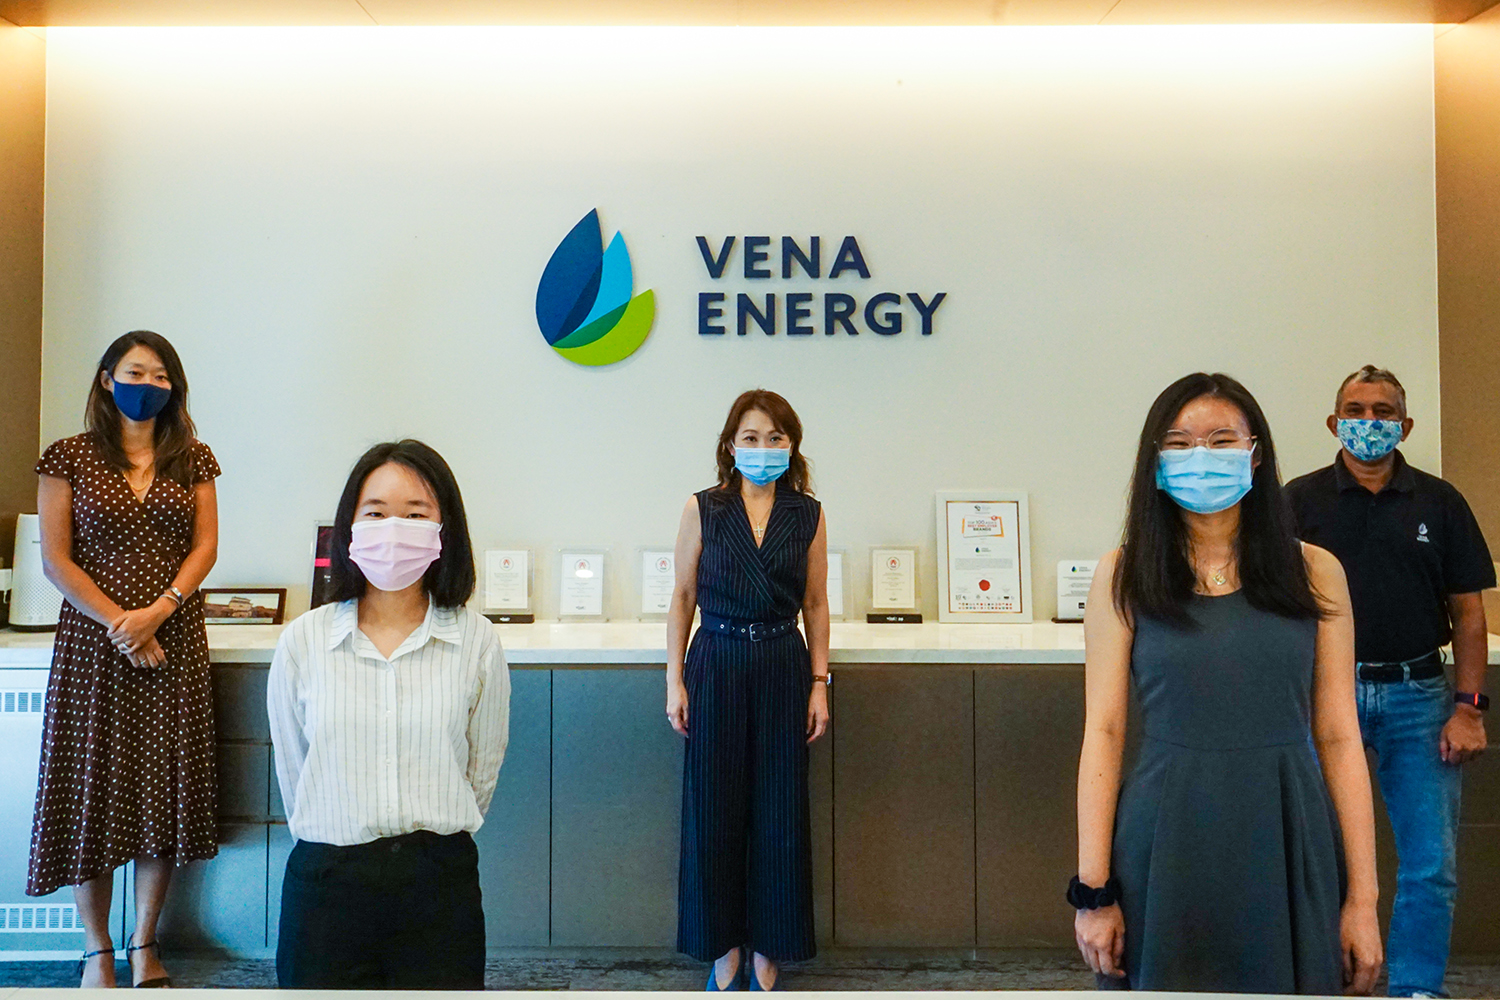 VENA_Energy_VENUS_Sponsorship_1